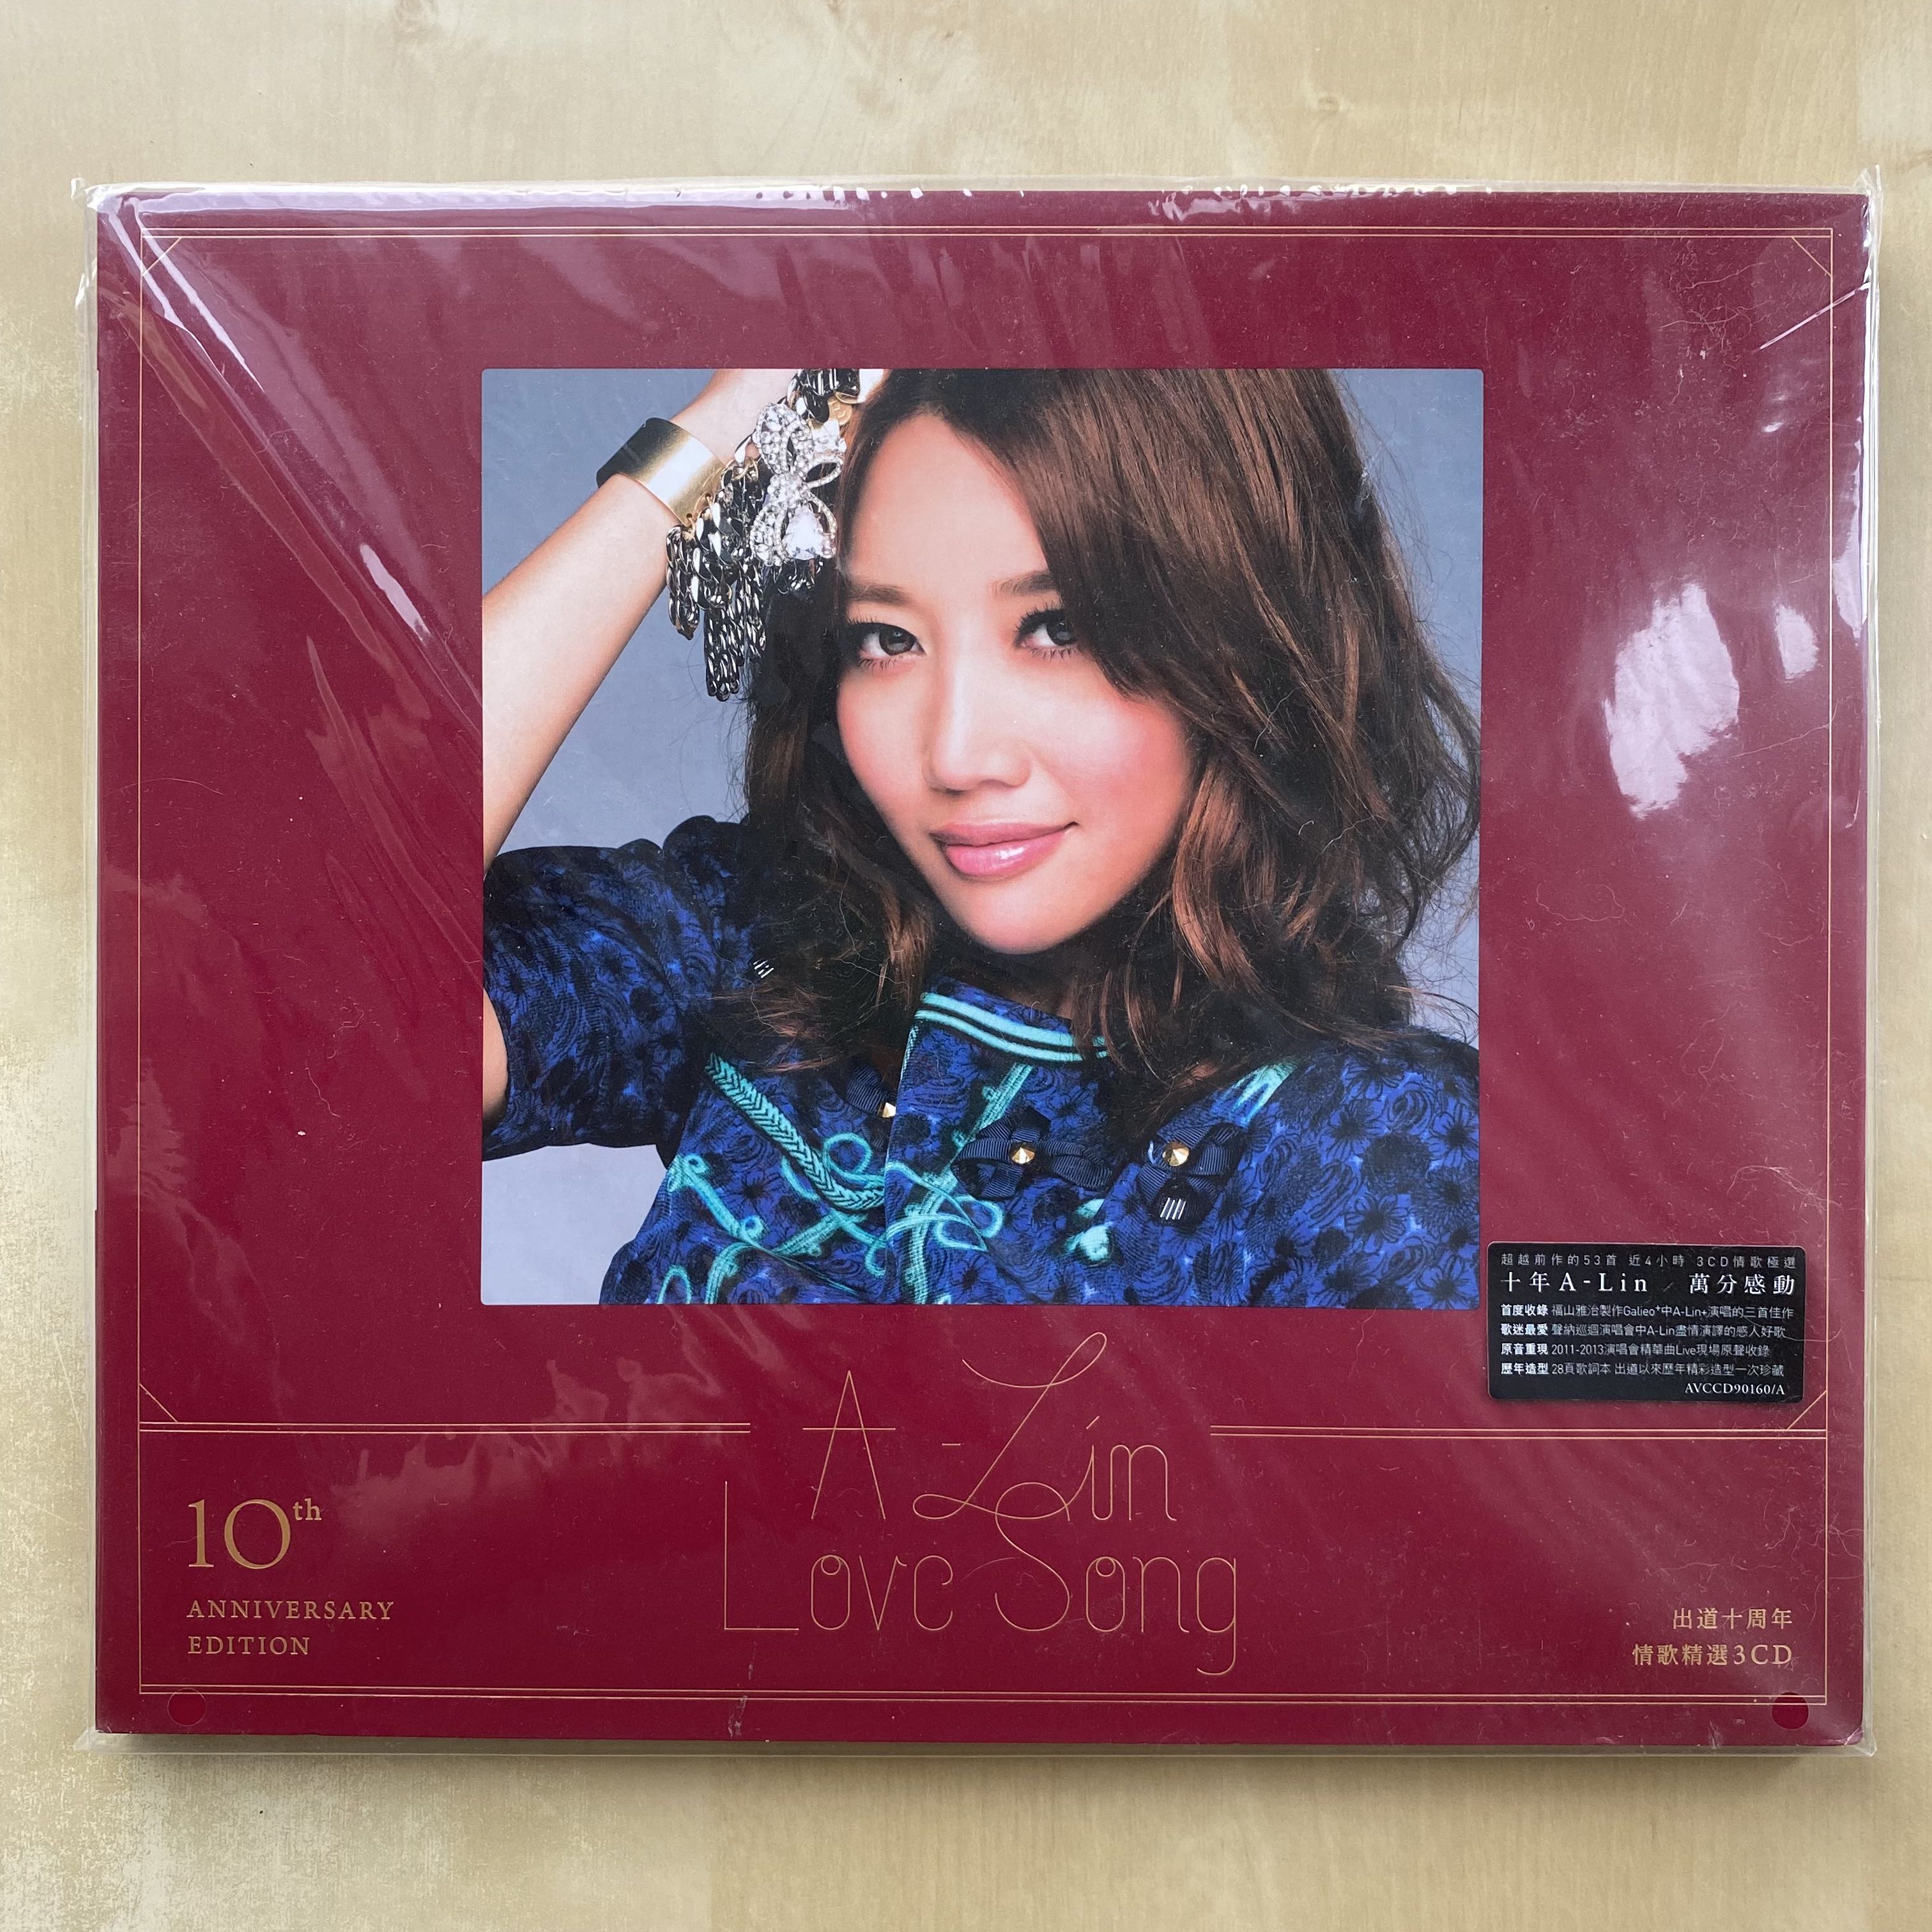 CD丨黃麗玲A-Lin - Love Song 出道十周年情歌精選(3CD) (精美包裝+28P